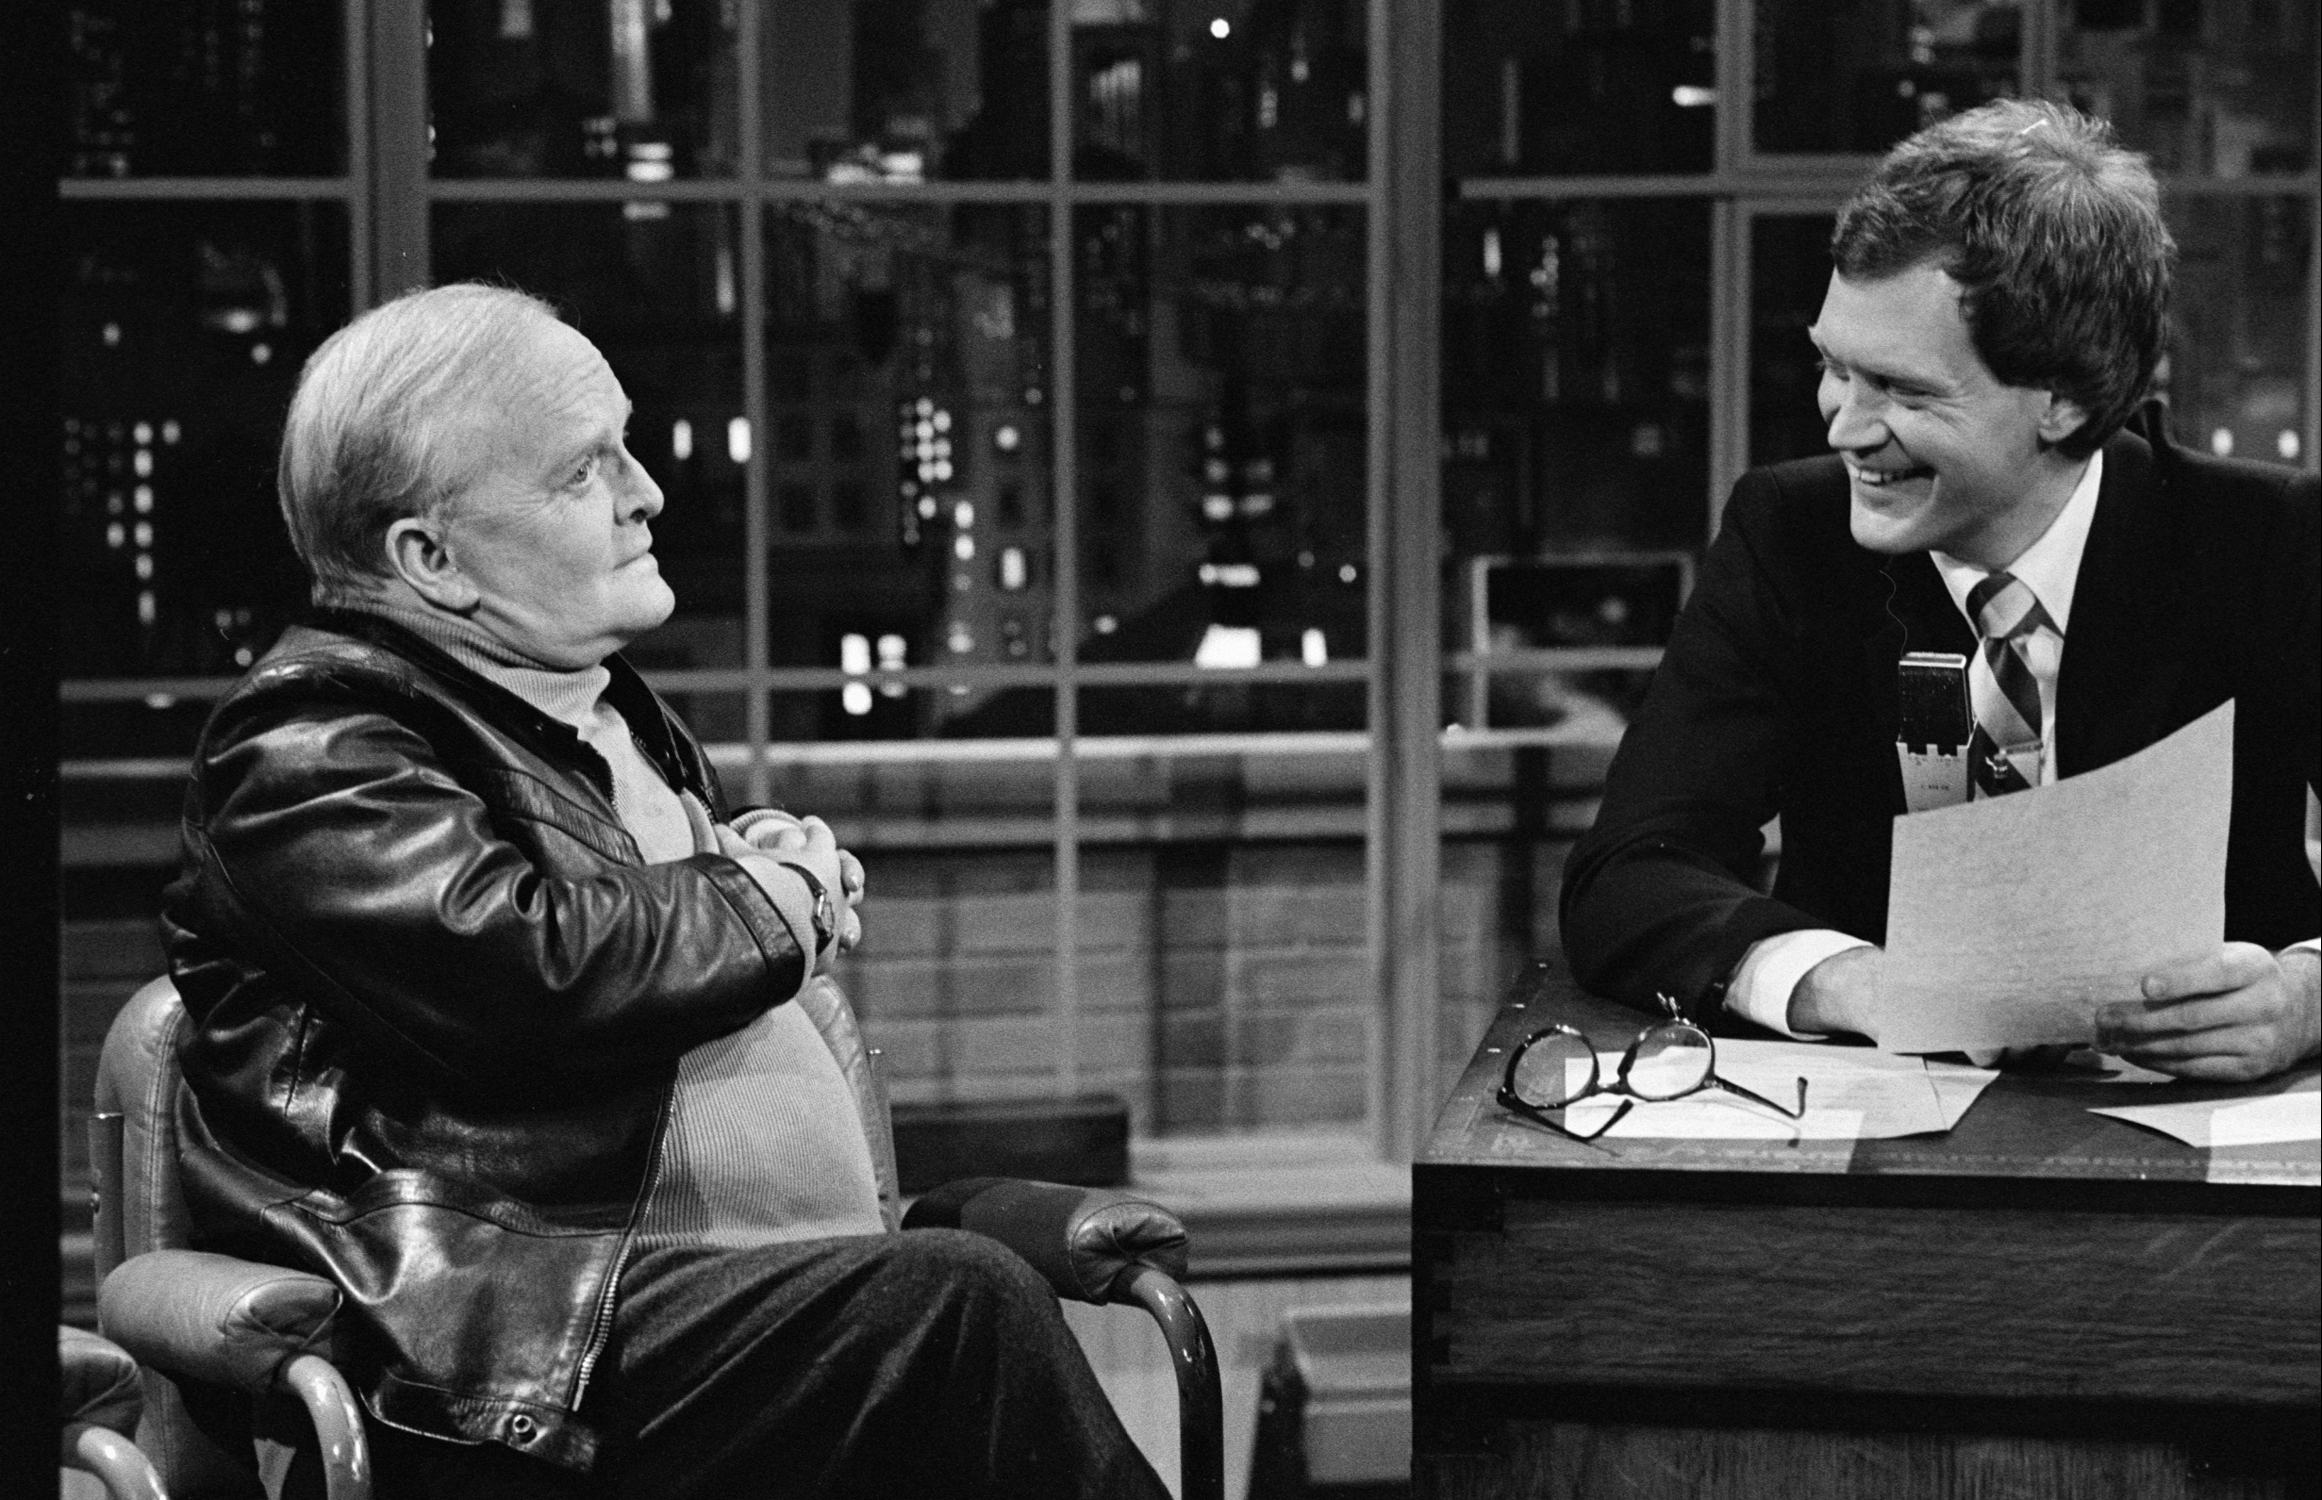 Truma Capote and David Letterman on the David Letterman show.